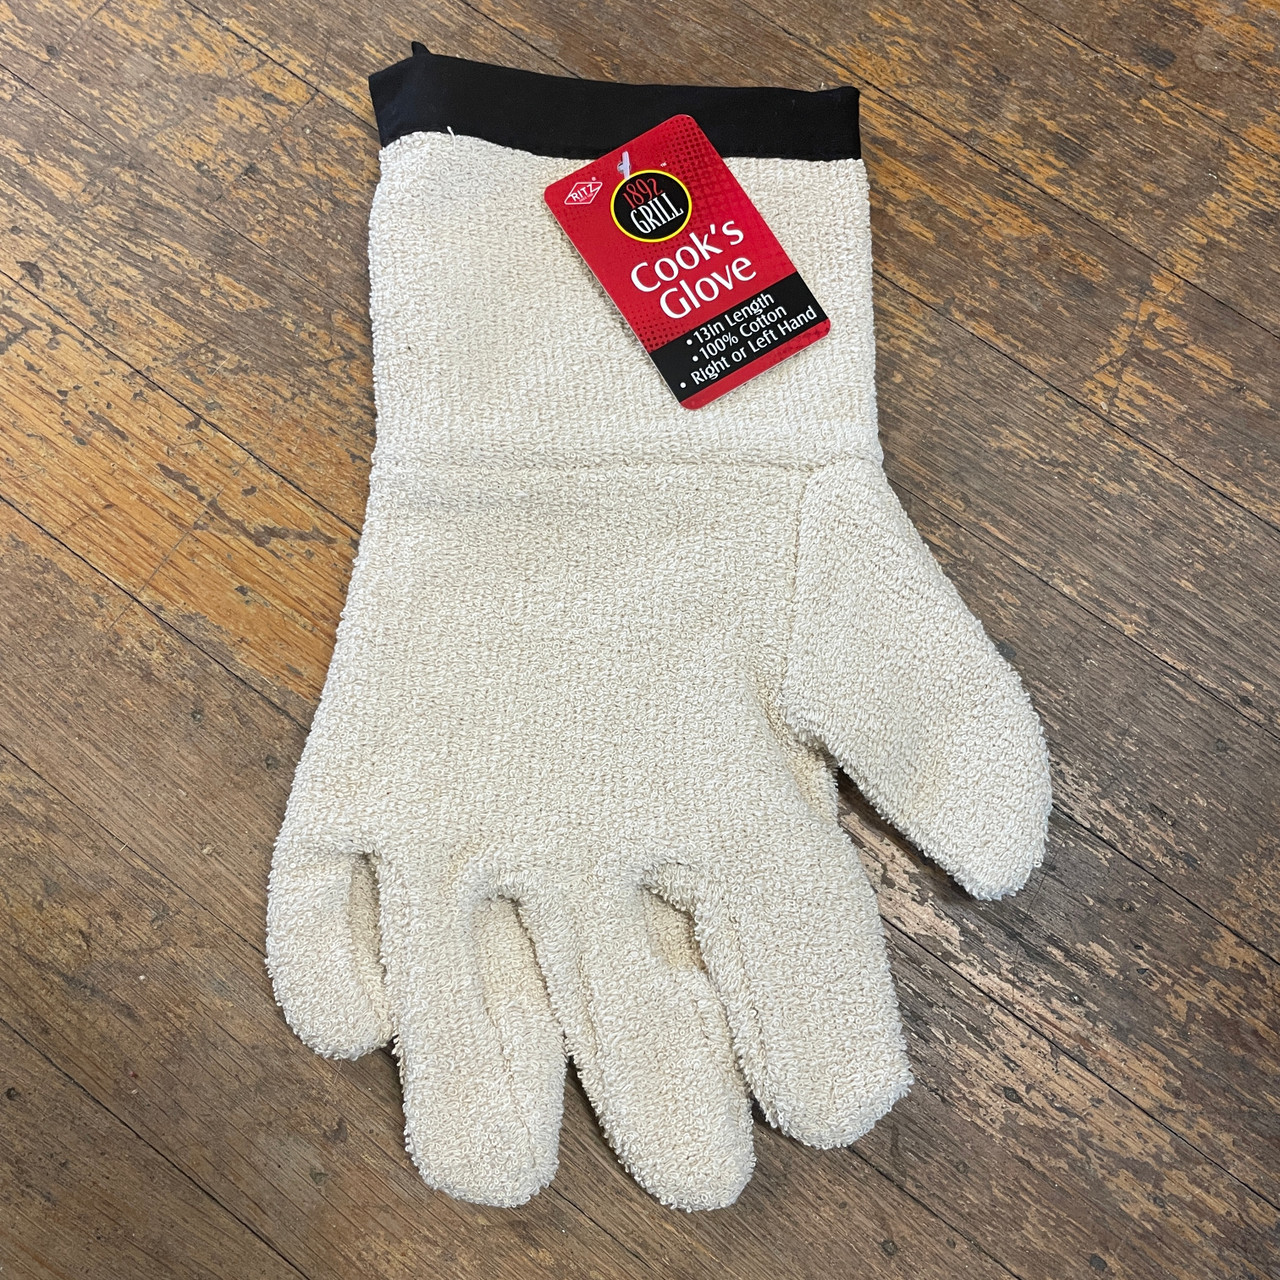 Ritz Pro Series Cook's Glove